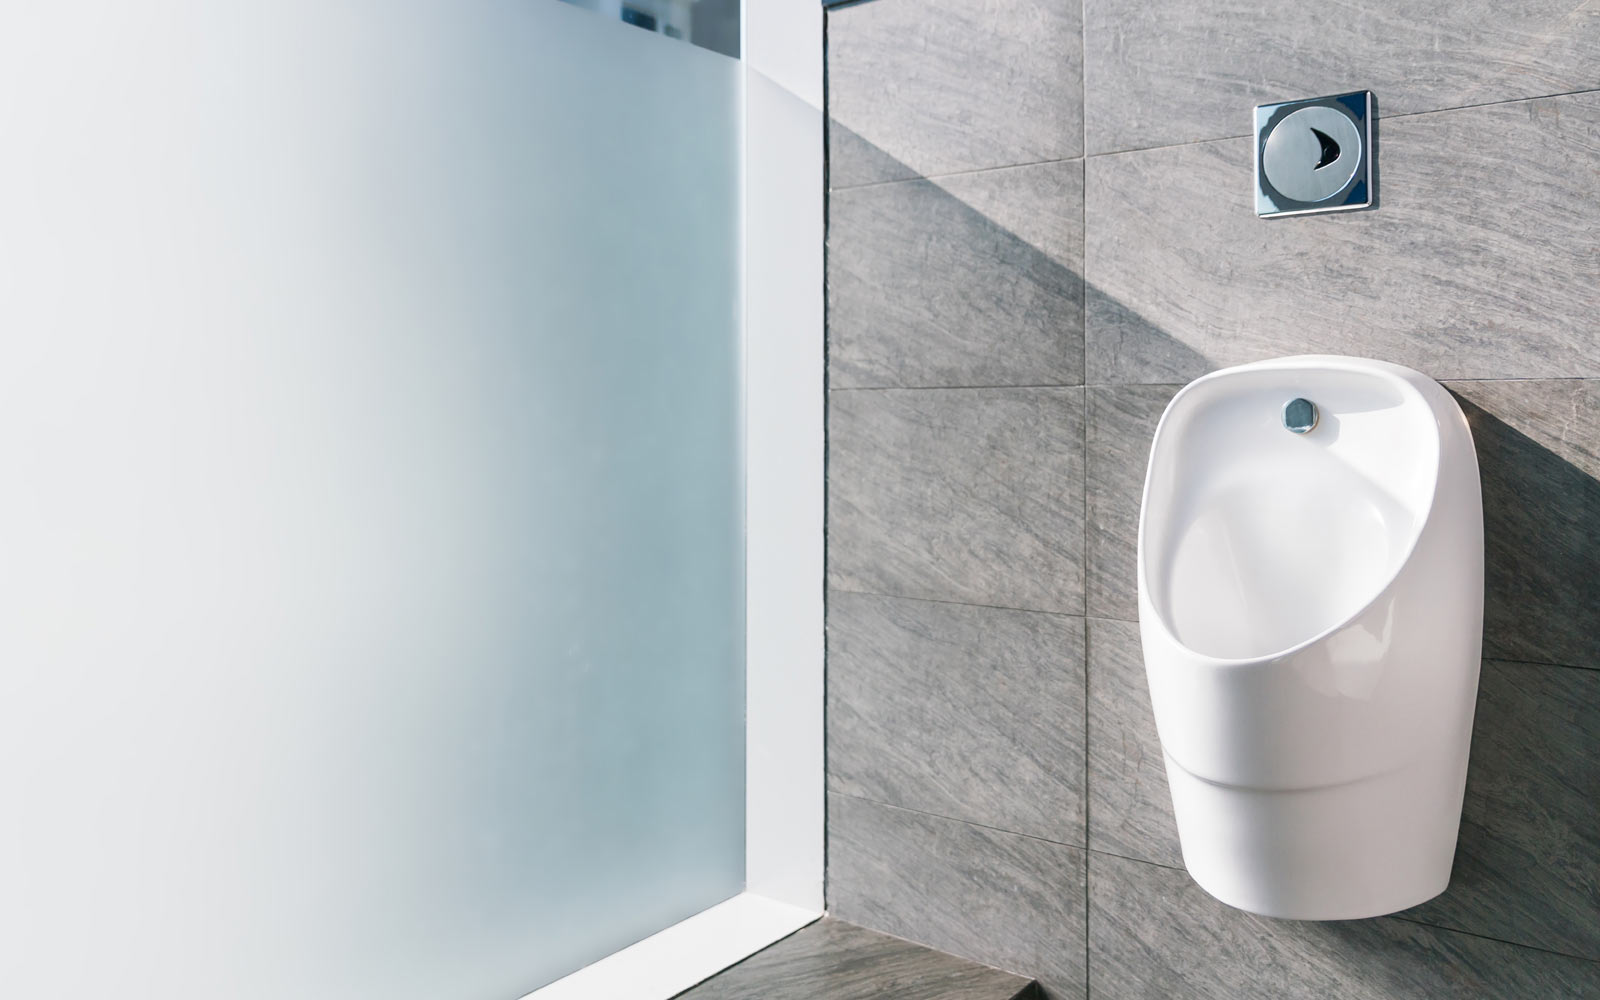 WC Flushing - Smart Sensor